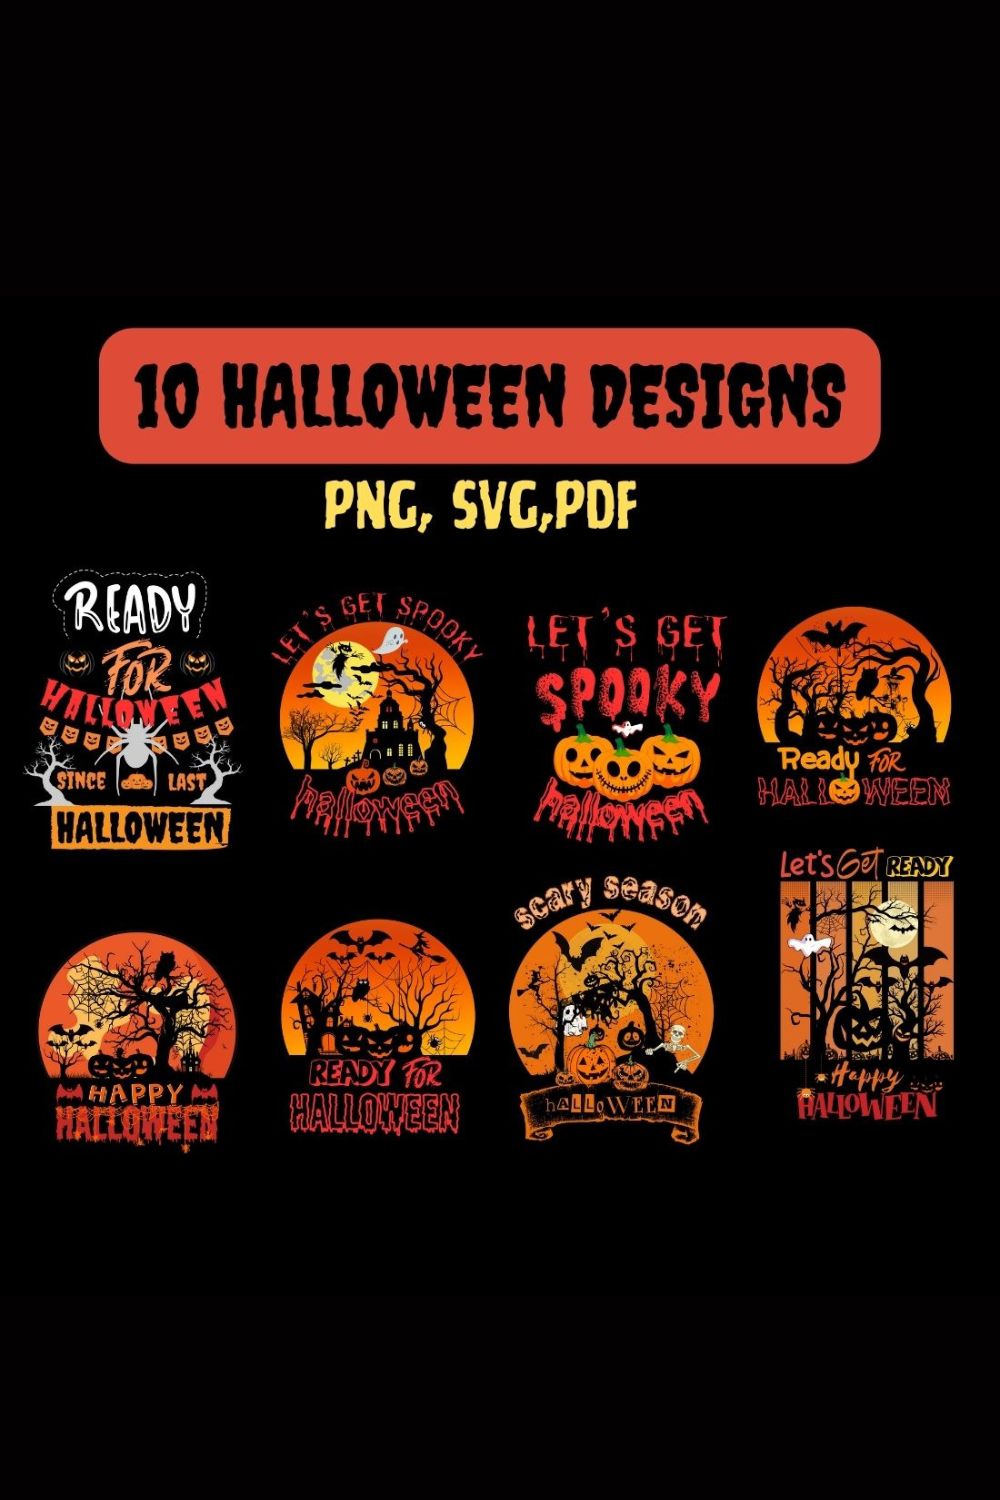 10 Halloween Designs pinterest preview image.